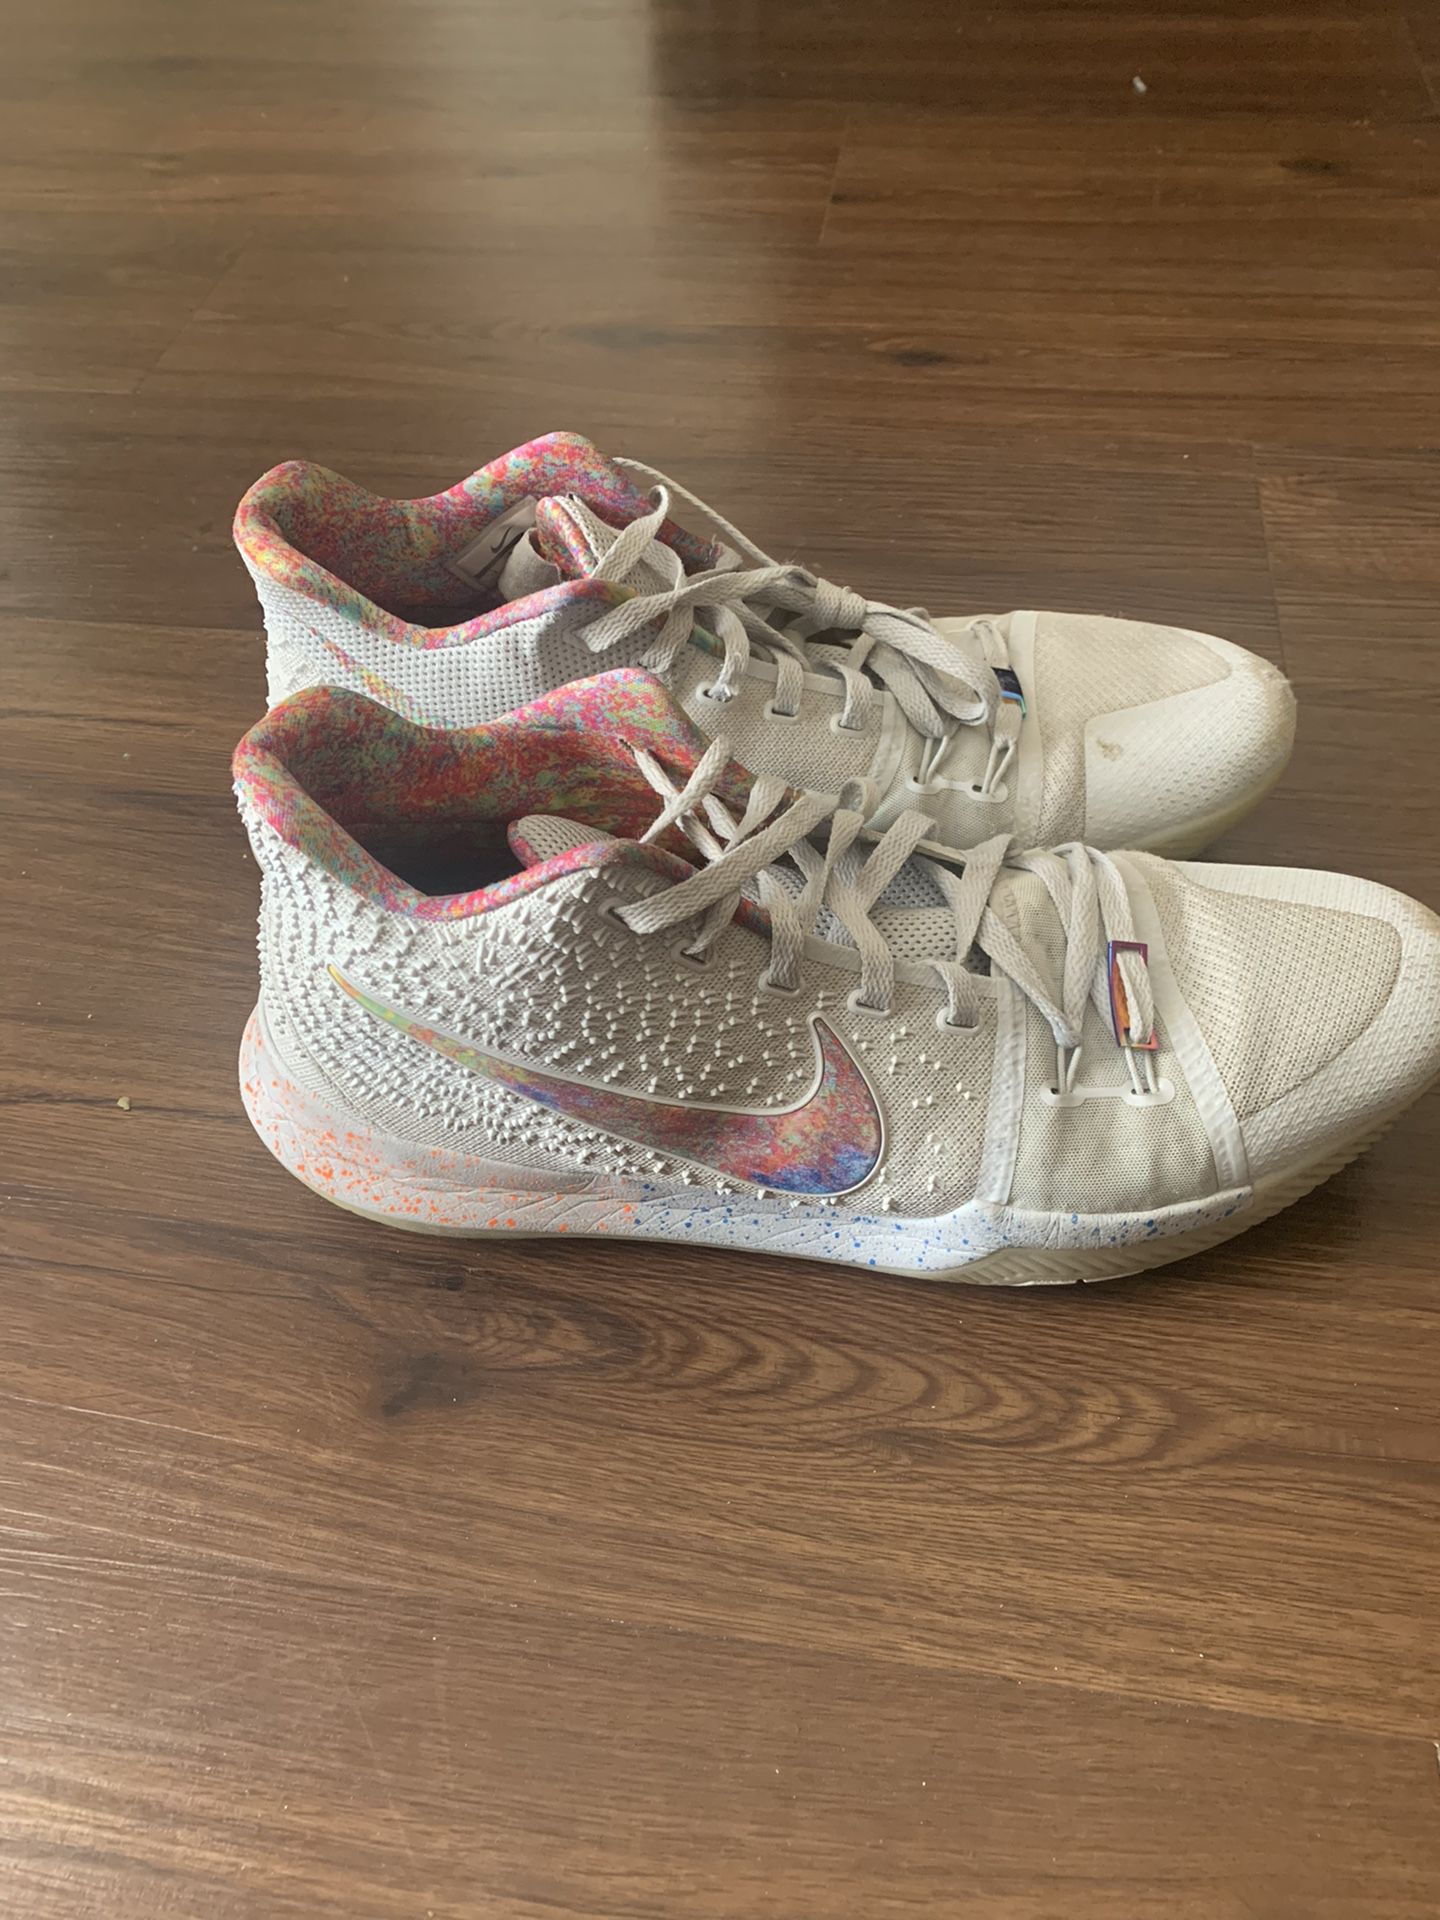 Size 14 Nike Kyrie basketball shoes